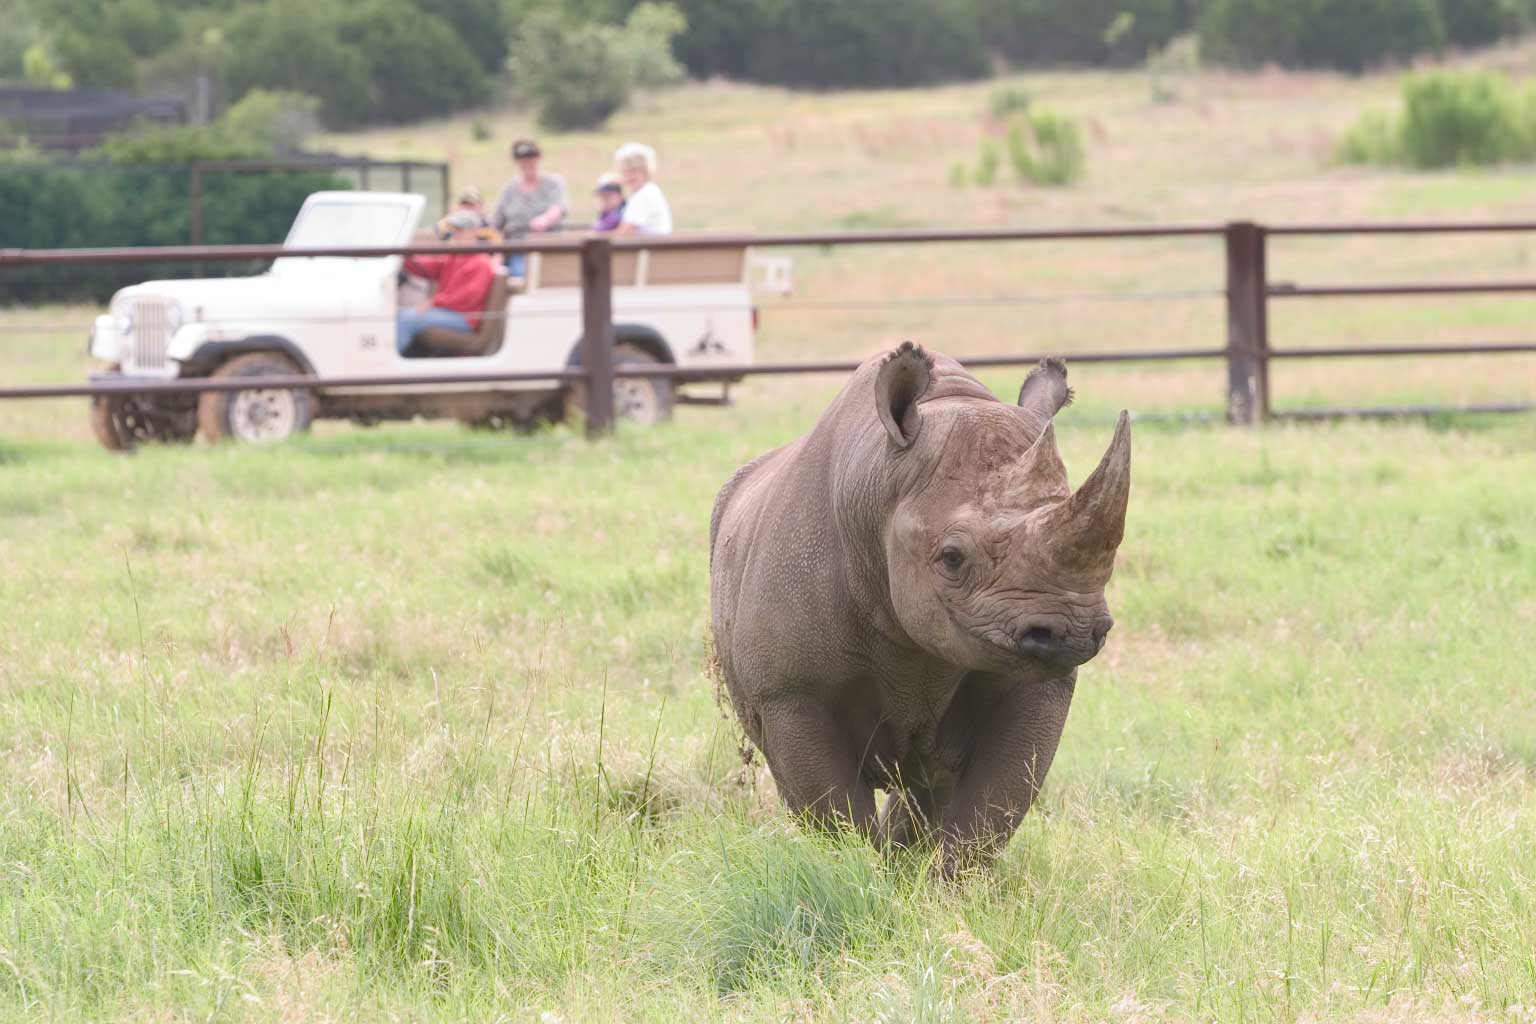 Rhino Encounter at Fossil Rim Wildlife Center